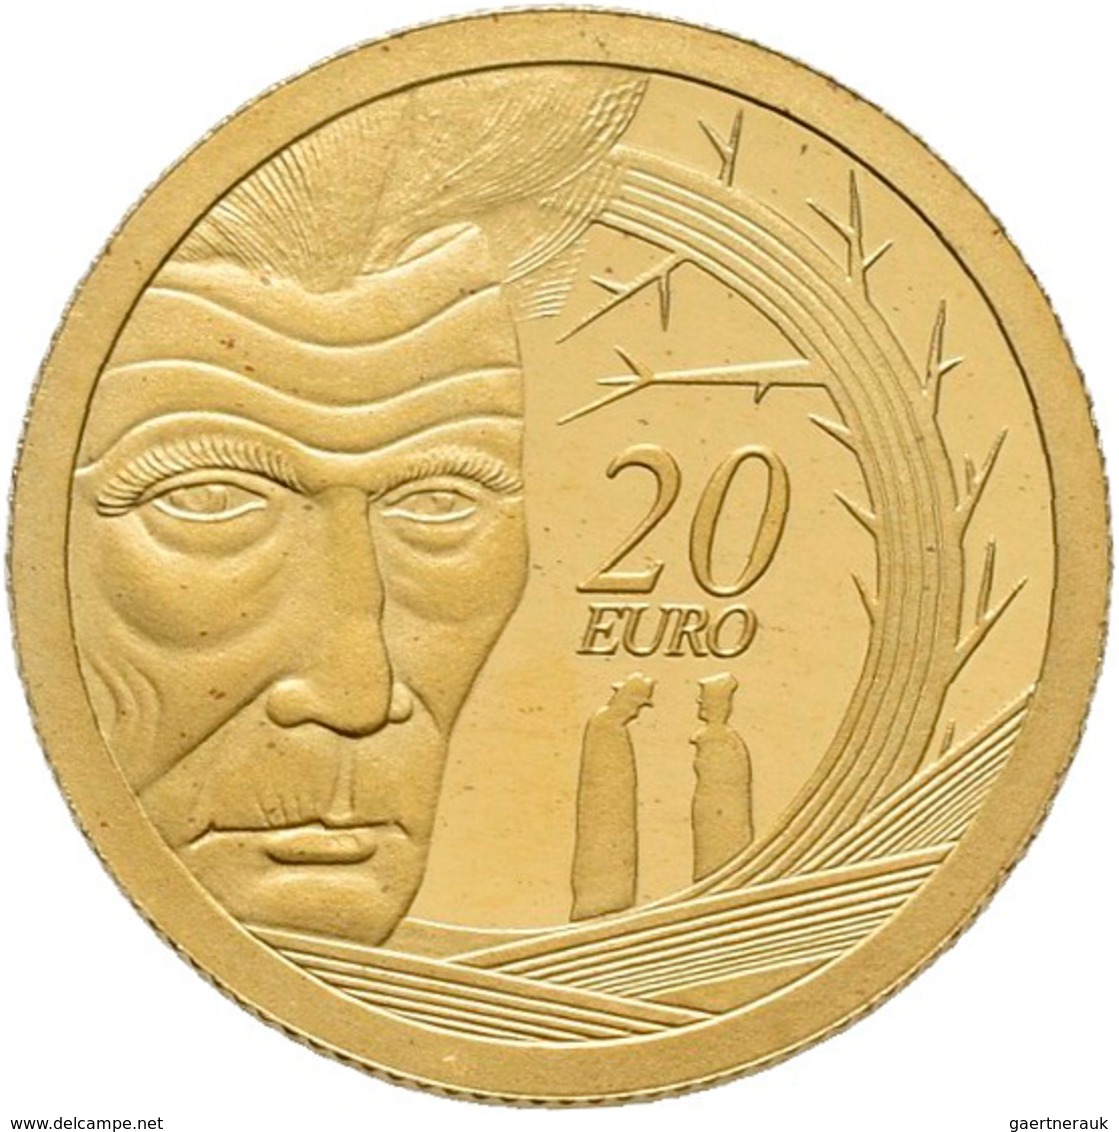 Alle Welt  - Anlagegold: Lot 13 Goldmünzen alle Welt; Australien: 5 Dollars 2002 (Fein 1,55 g), 5 Do